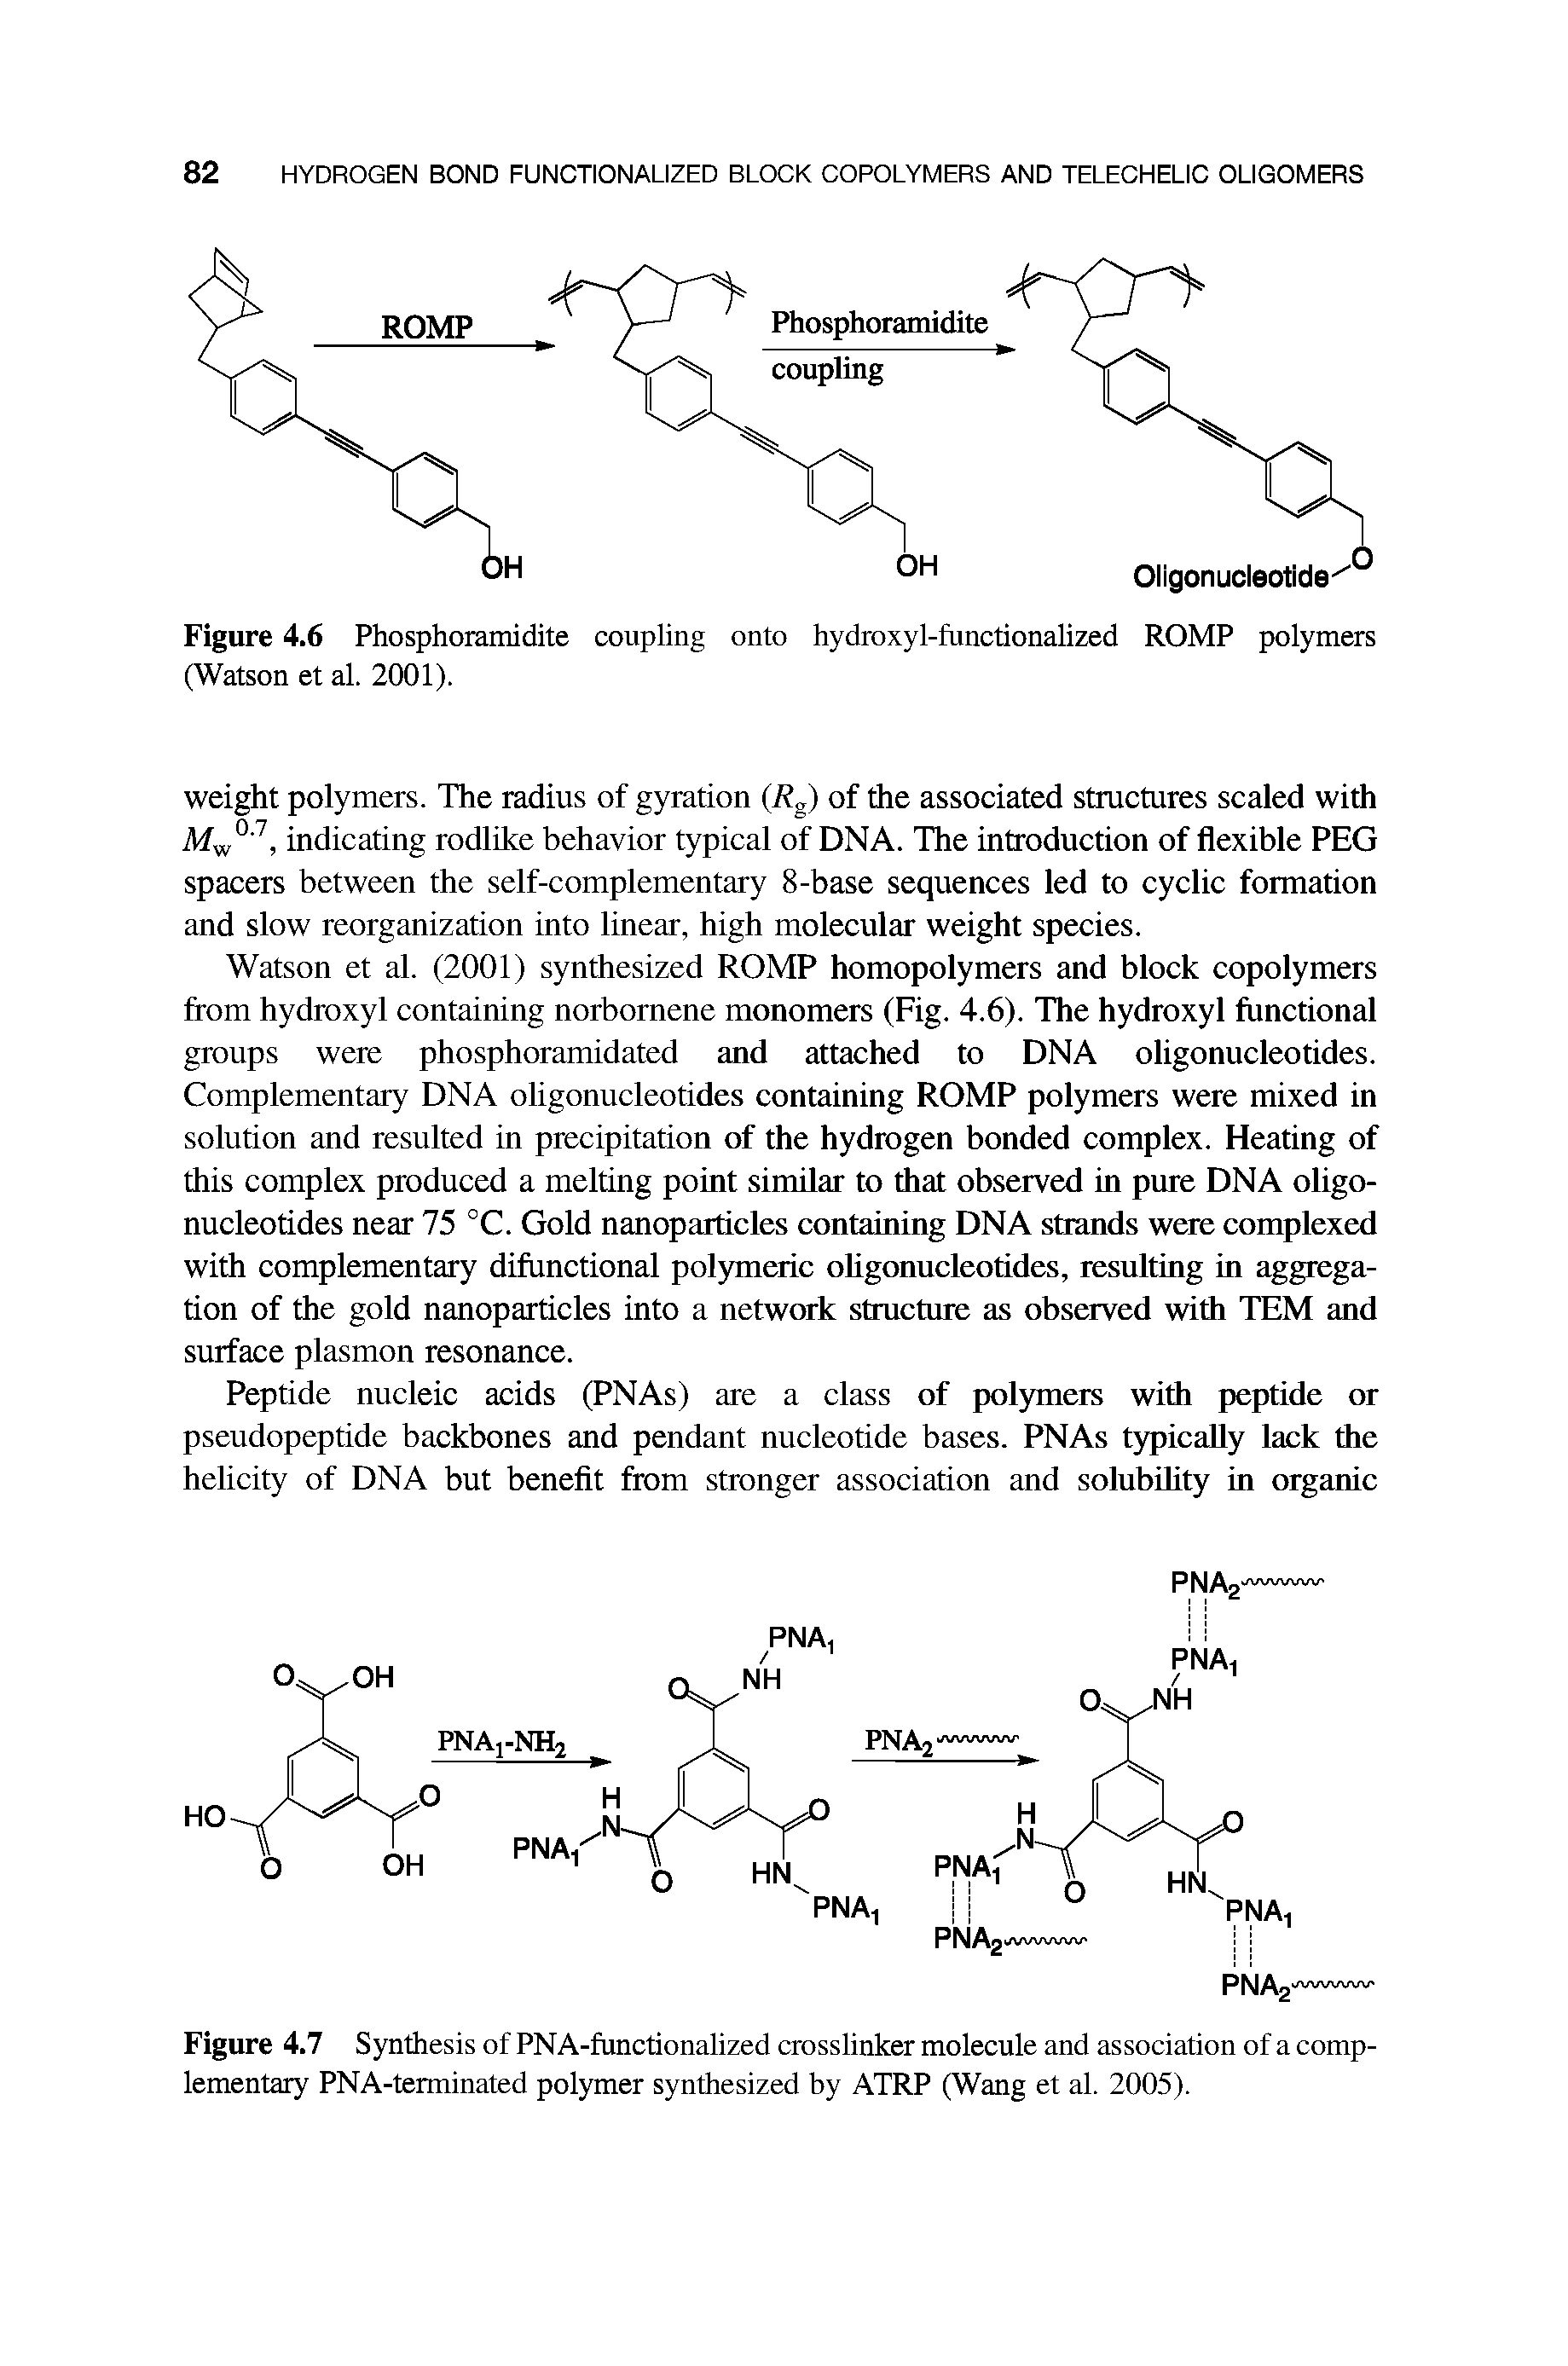 Figure 4.6 Phosphoramidite coupling onto hydroxyl-functionalized ROMP polymers (Watson et al. 2001).